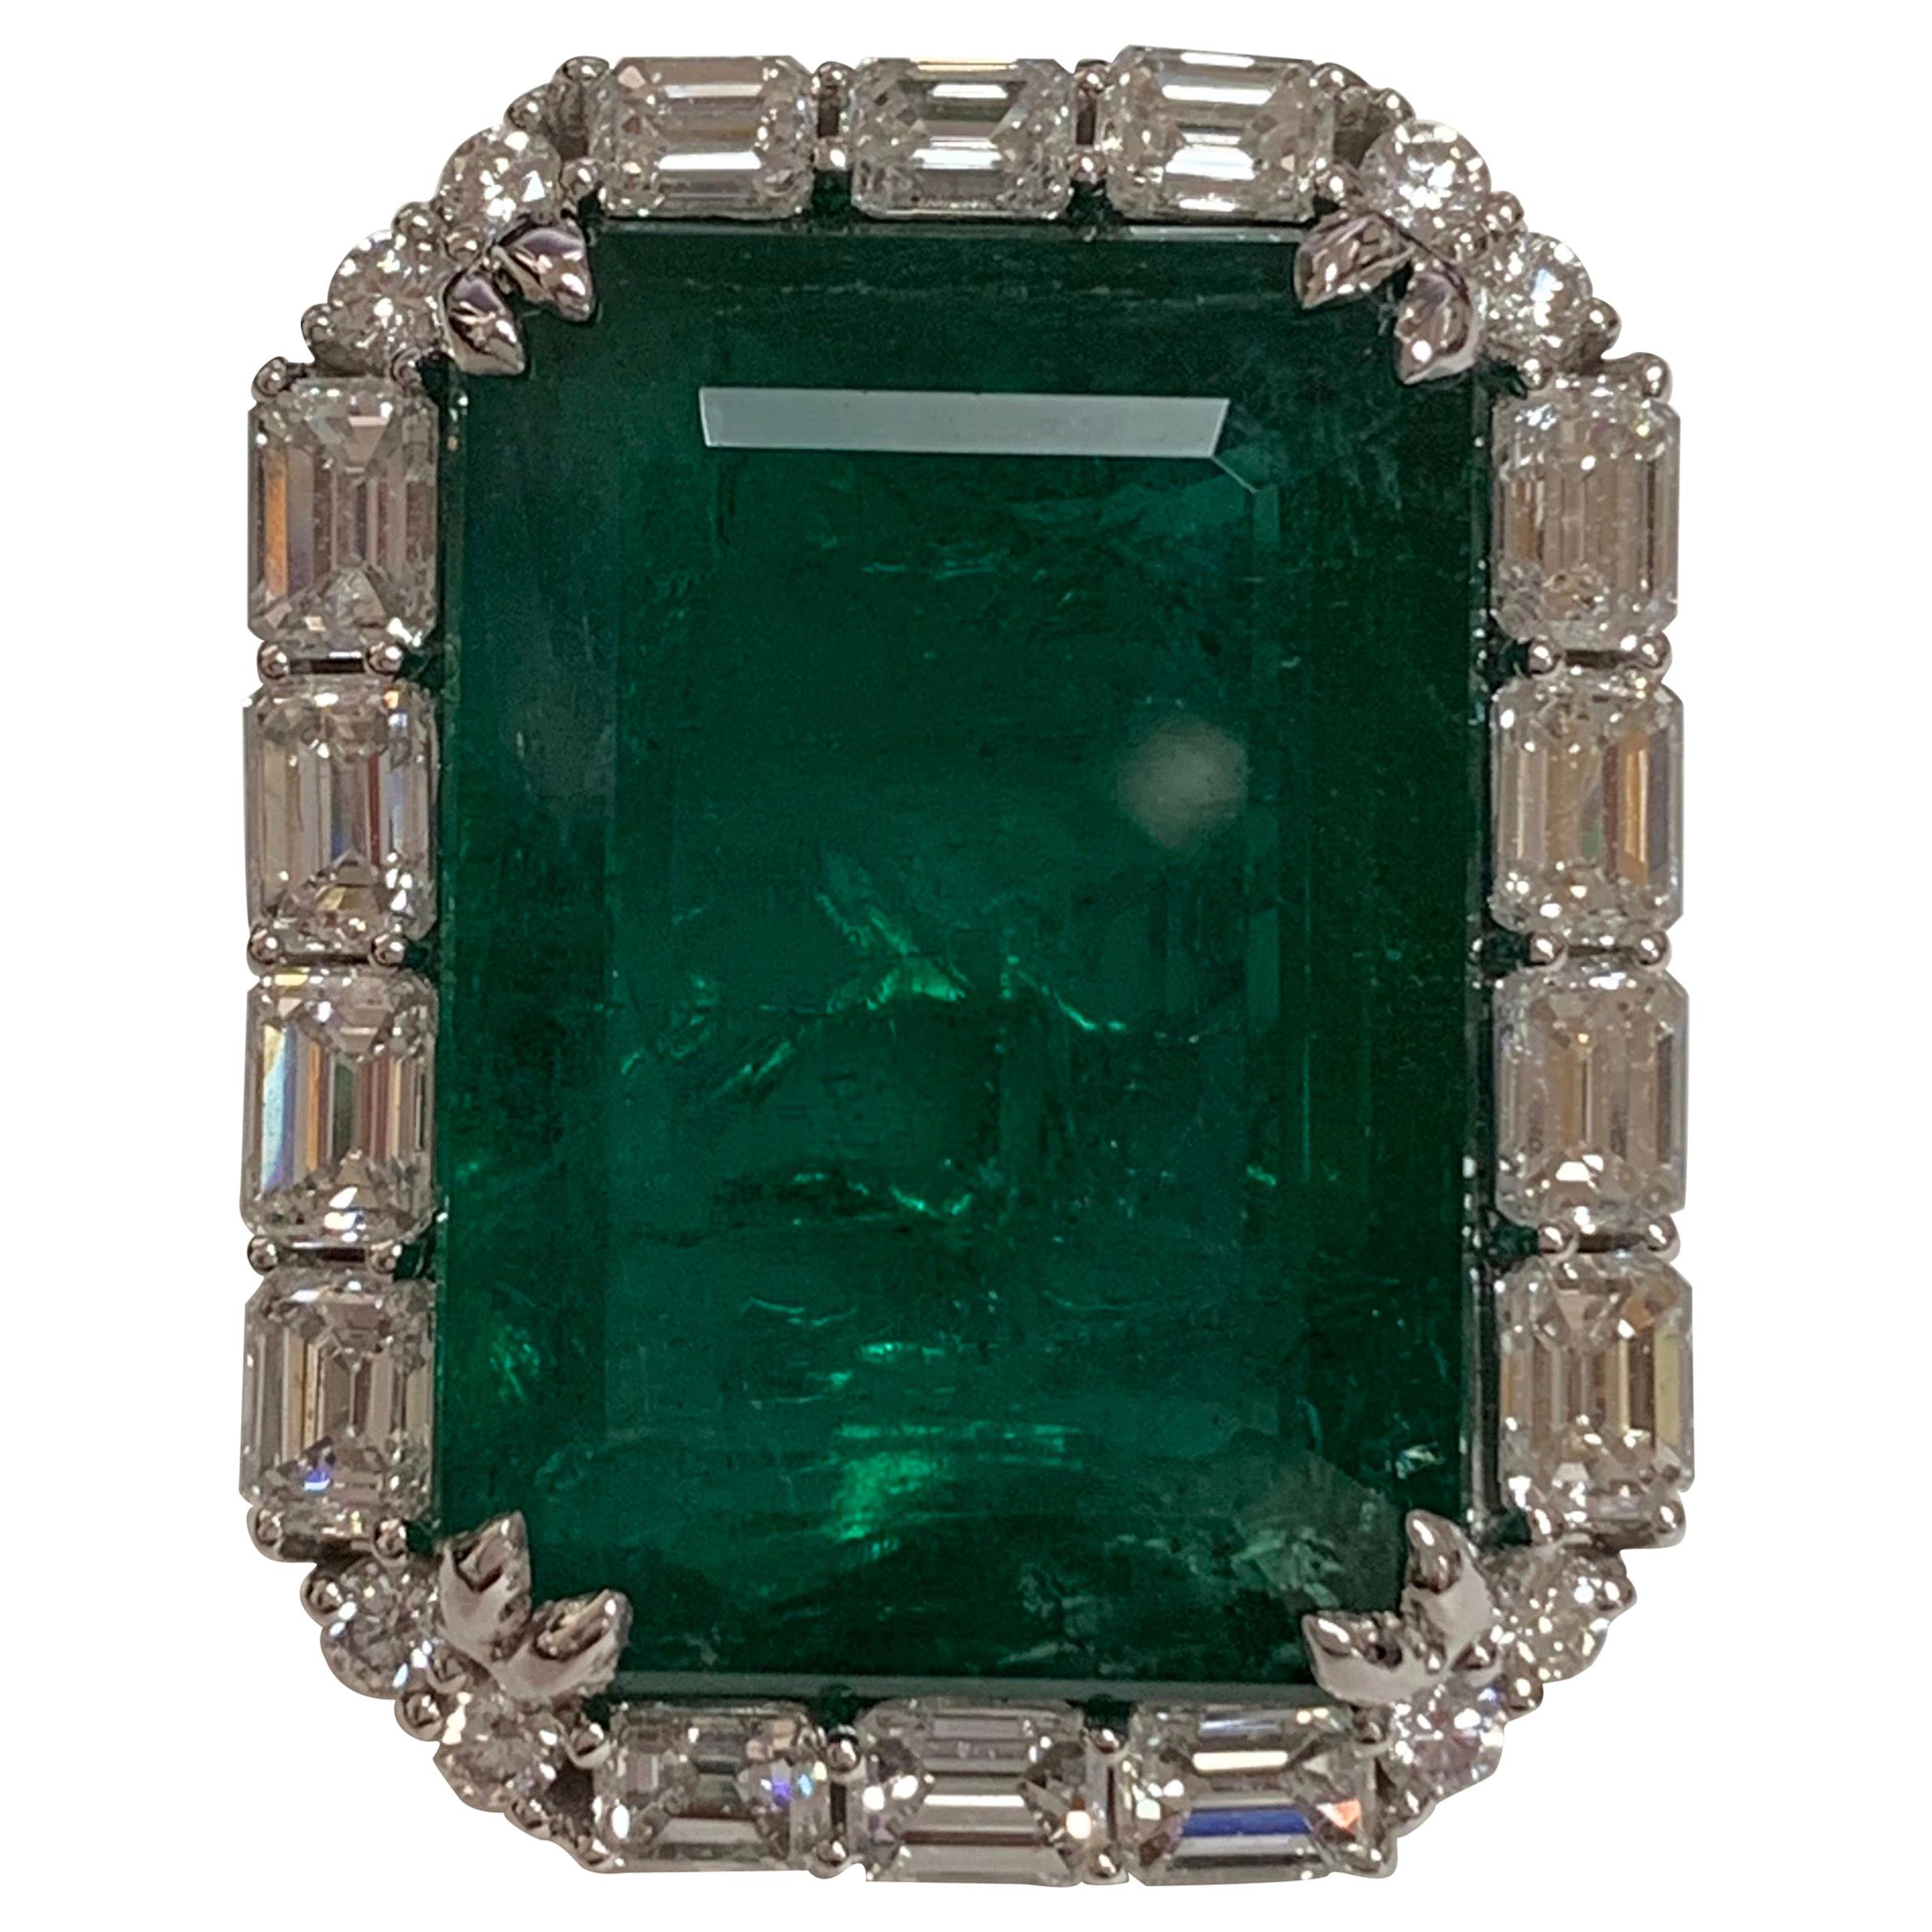 IGLCertified 23.98 Carat Emerald and a Diamond Ring